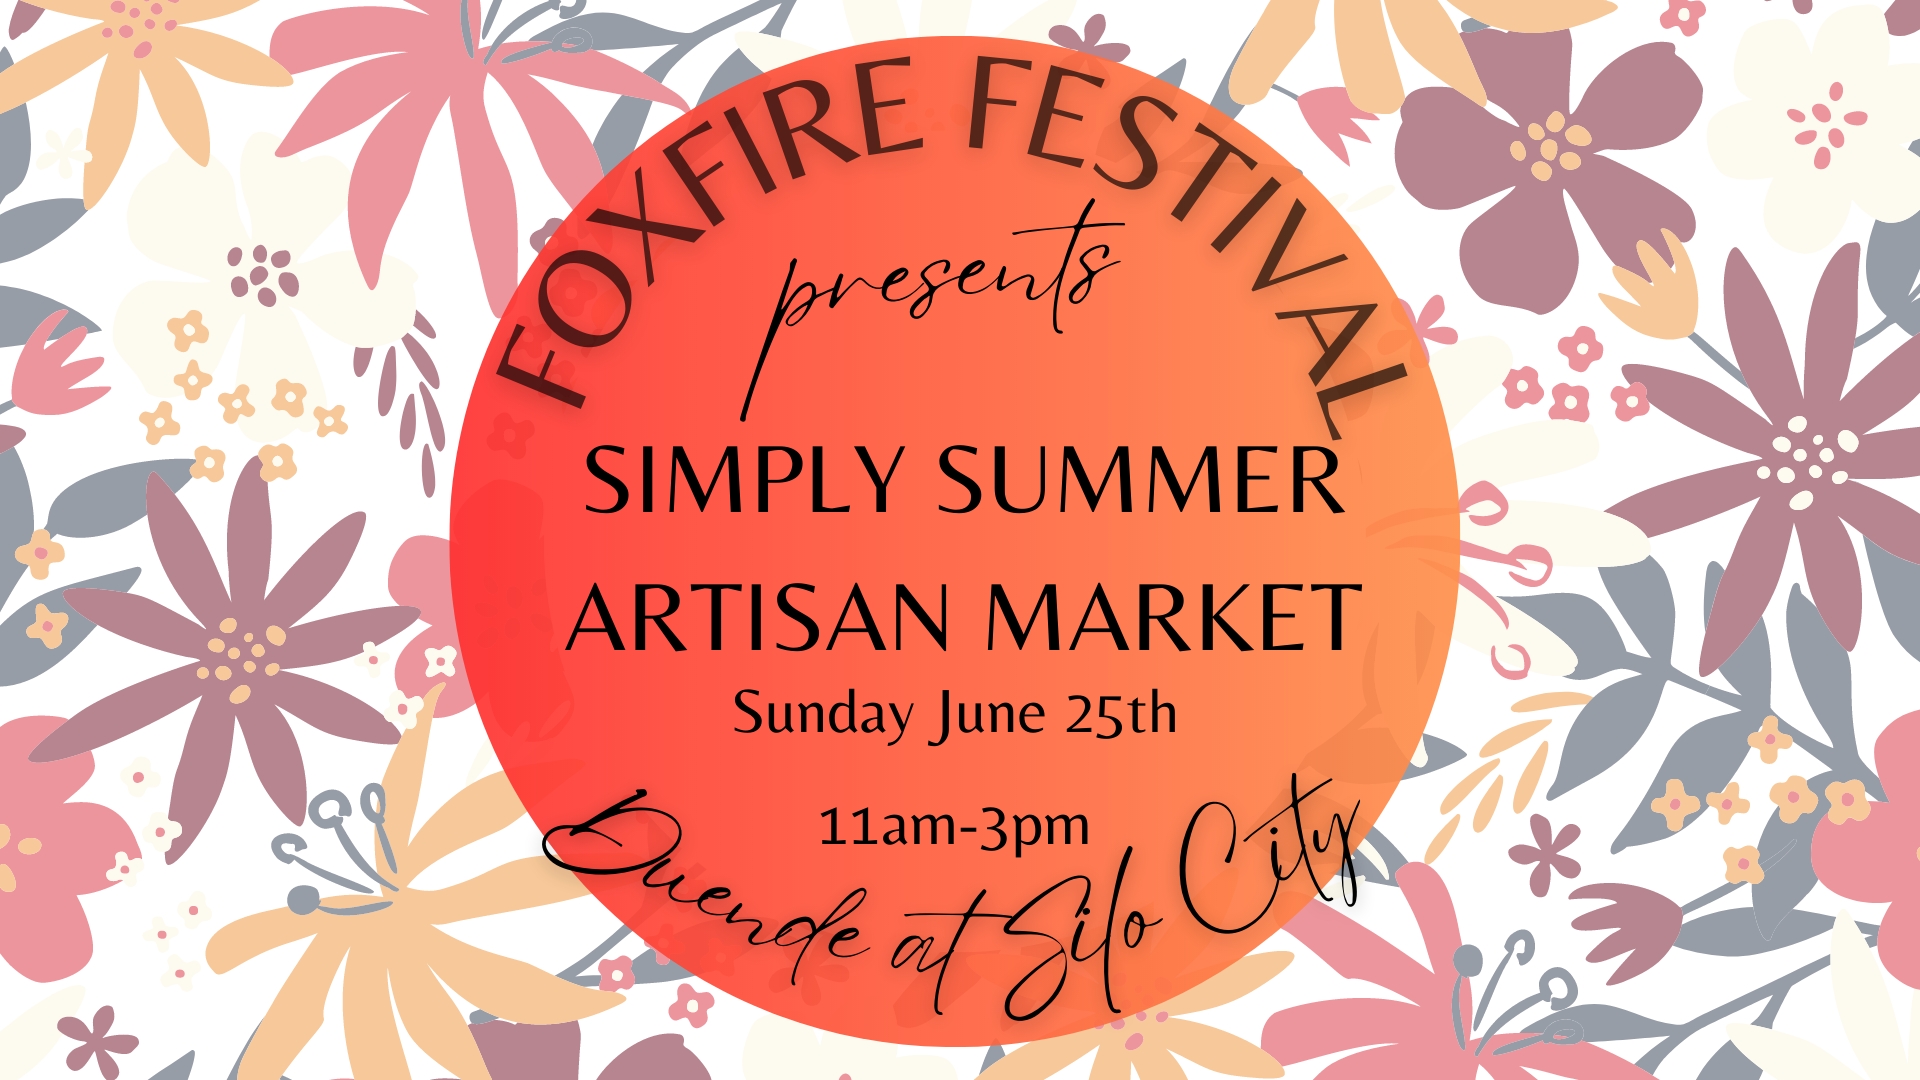 Foxfire Festival Simply Summer Artisan Market cover image